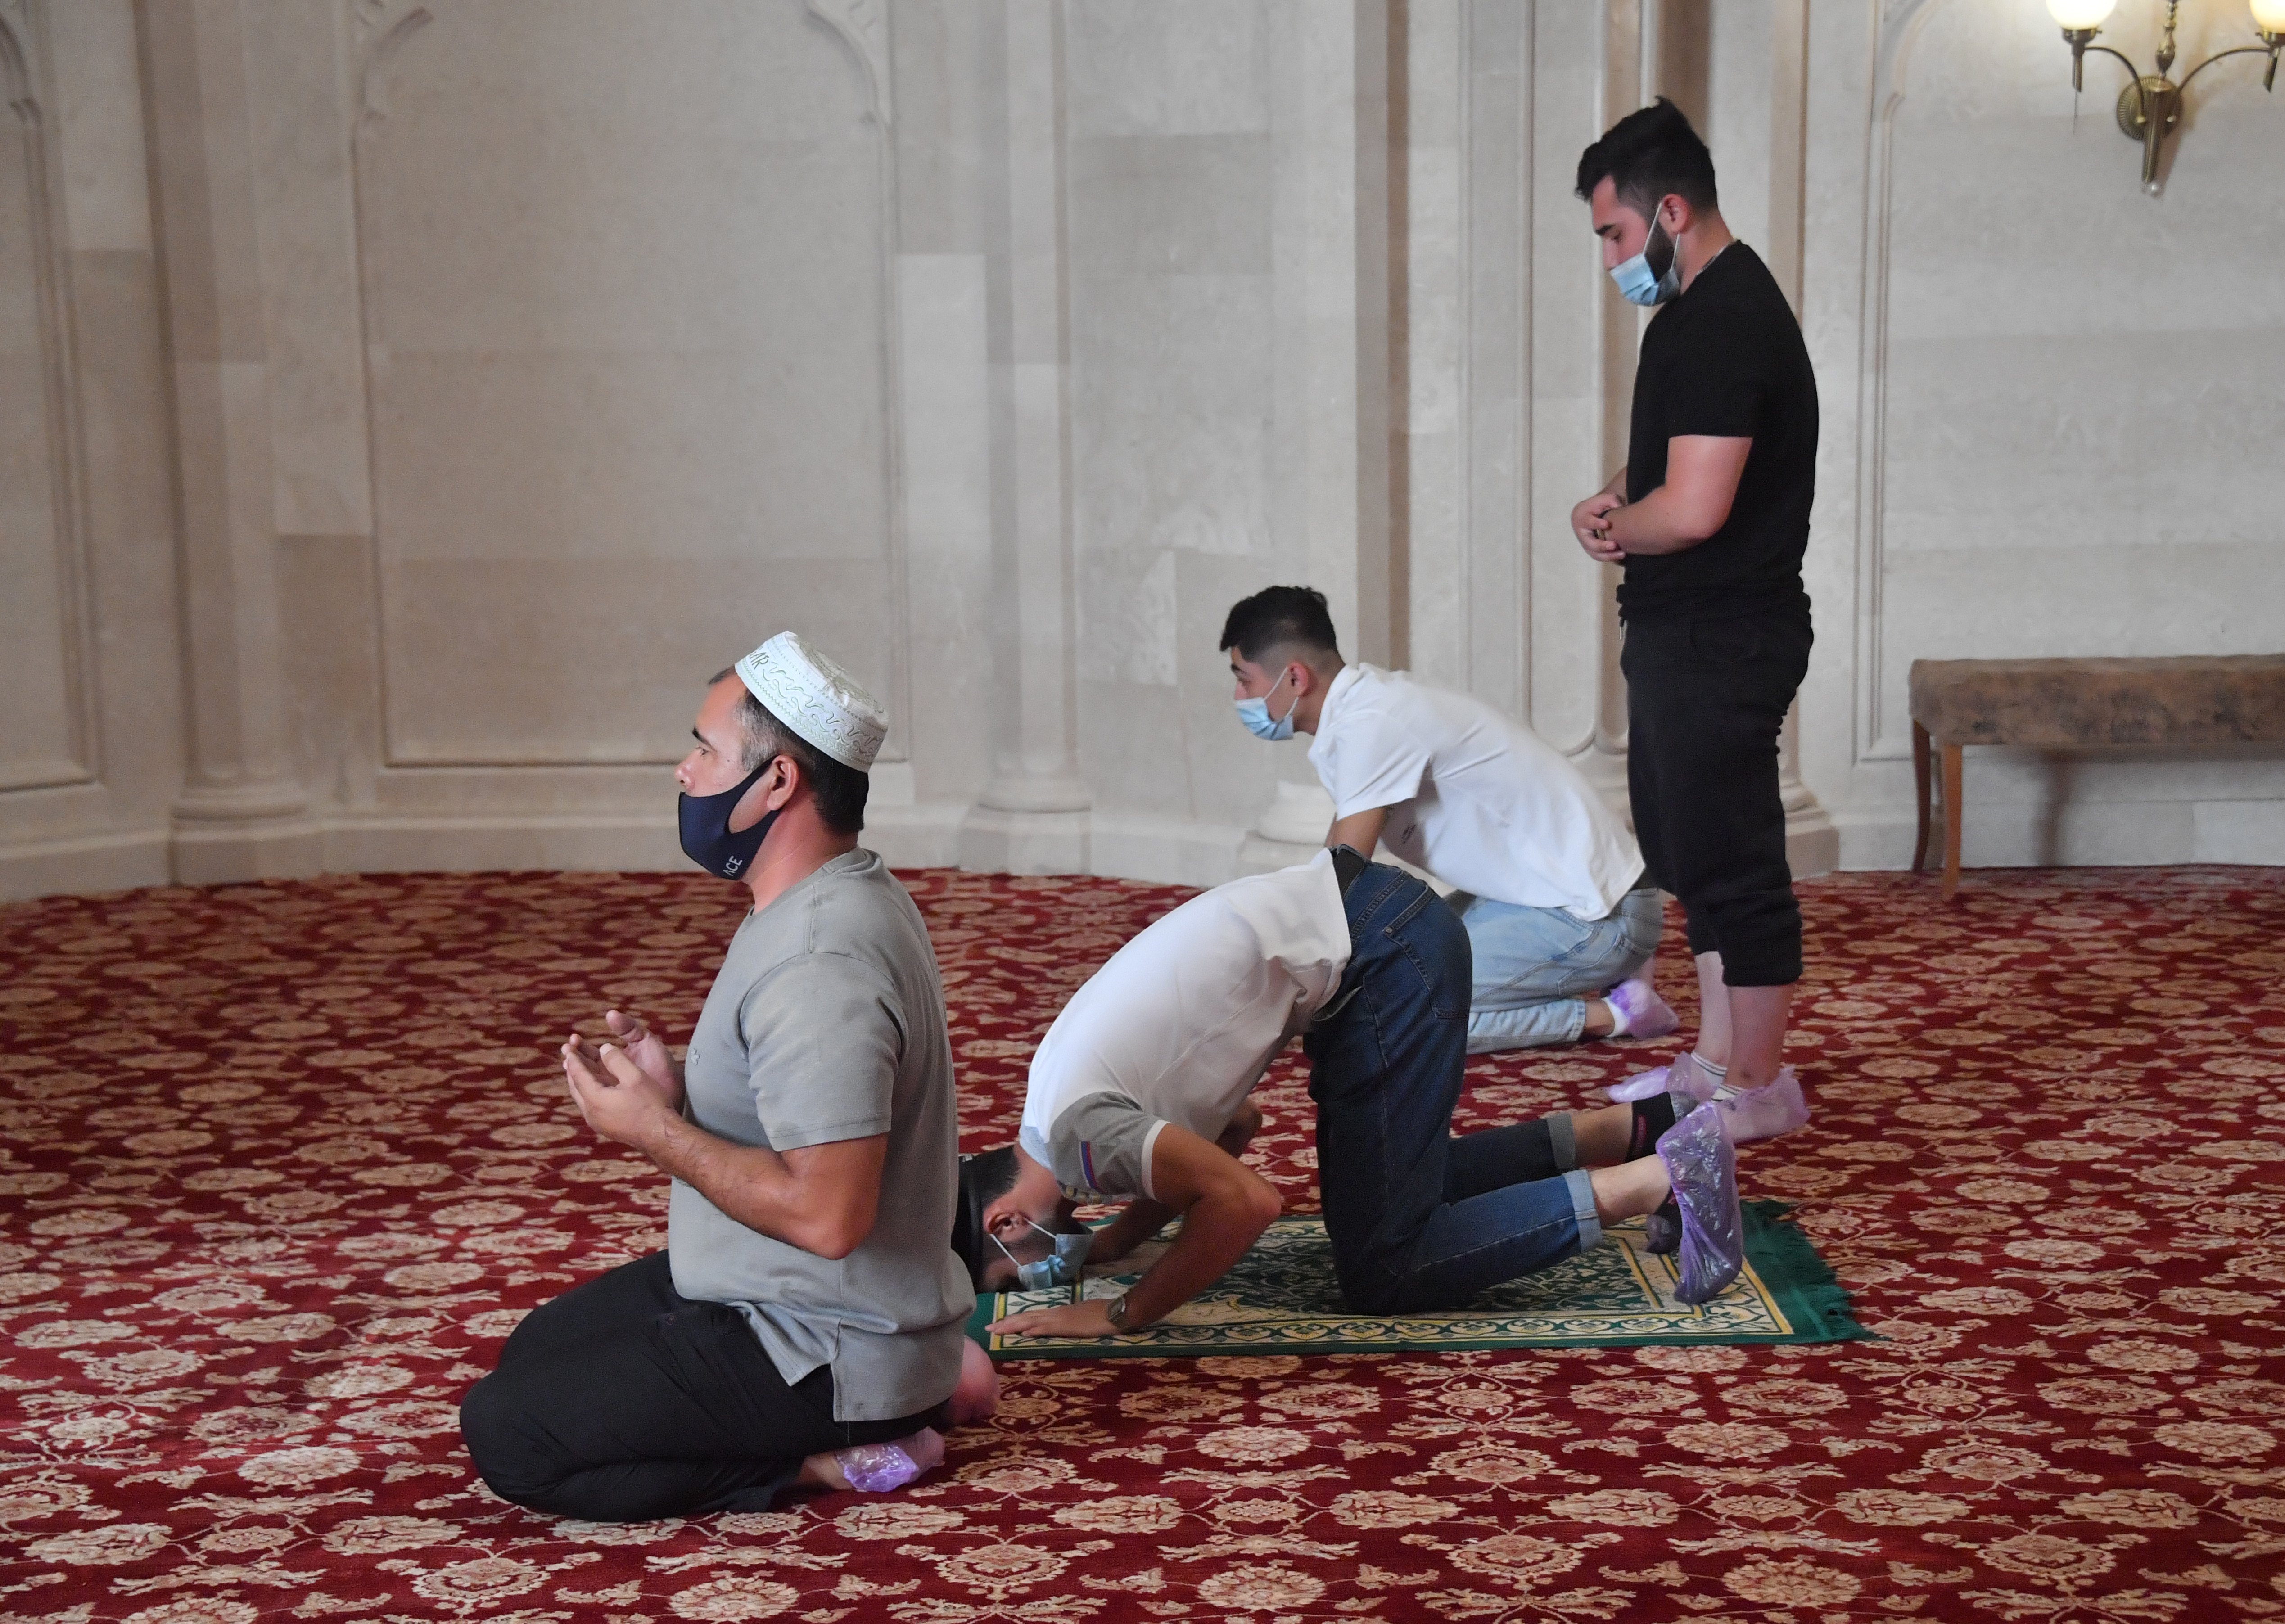 Намаз джамаатом имам. Мусульмане молятся в мечети. Коллективный намаз в мечети. Мужчина в мечети. Молебны мусульман в мечети.